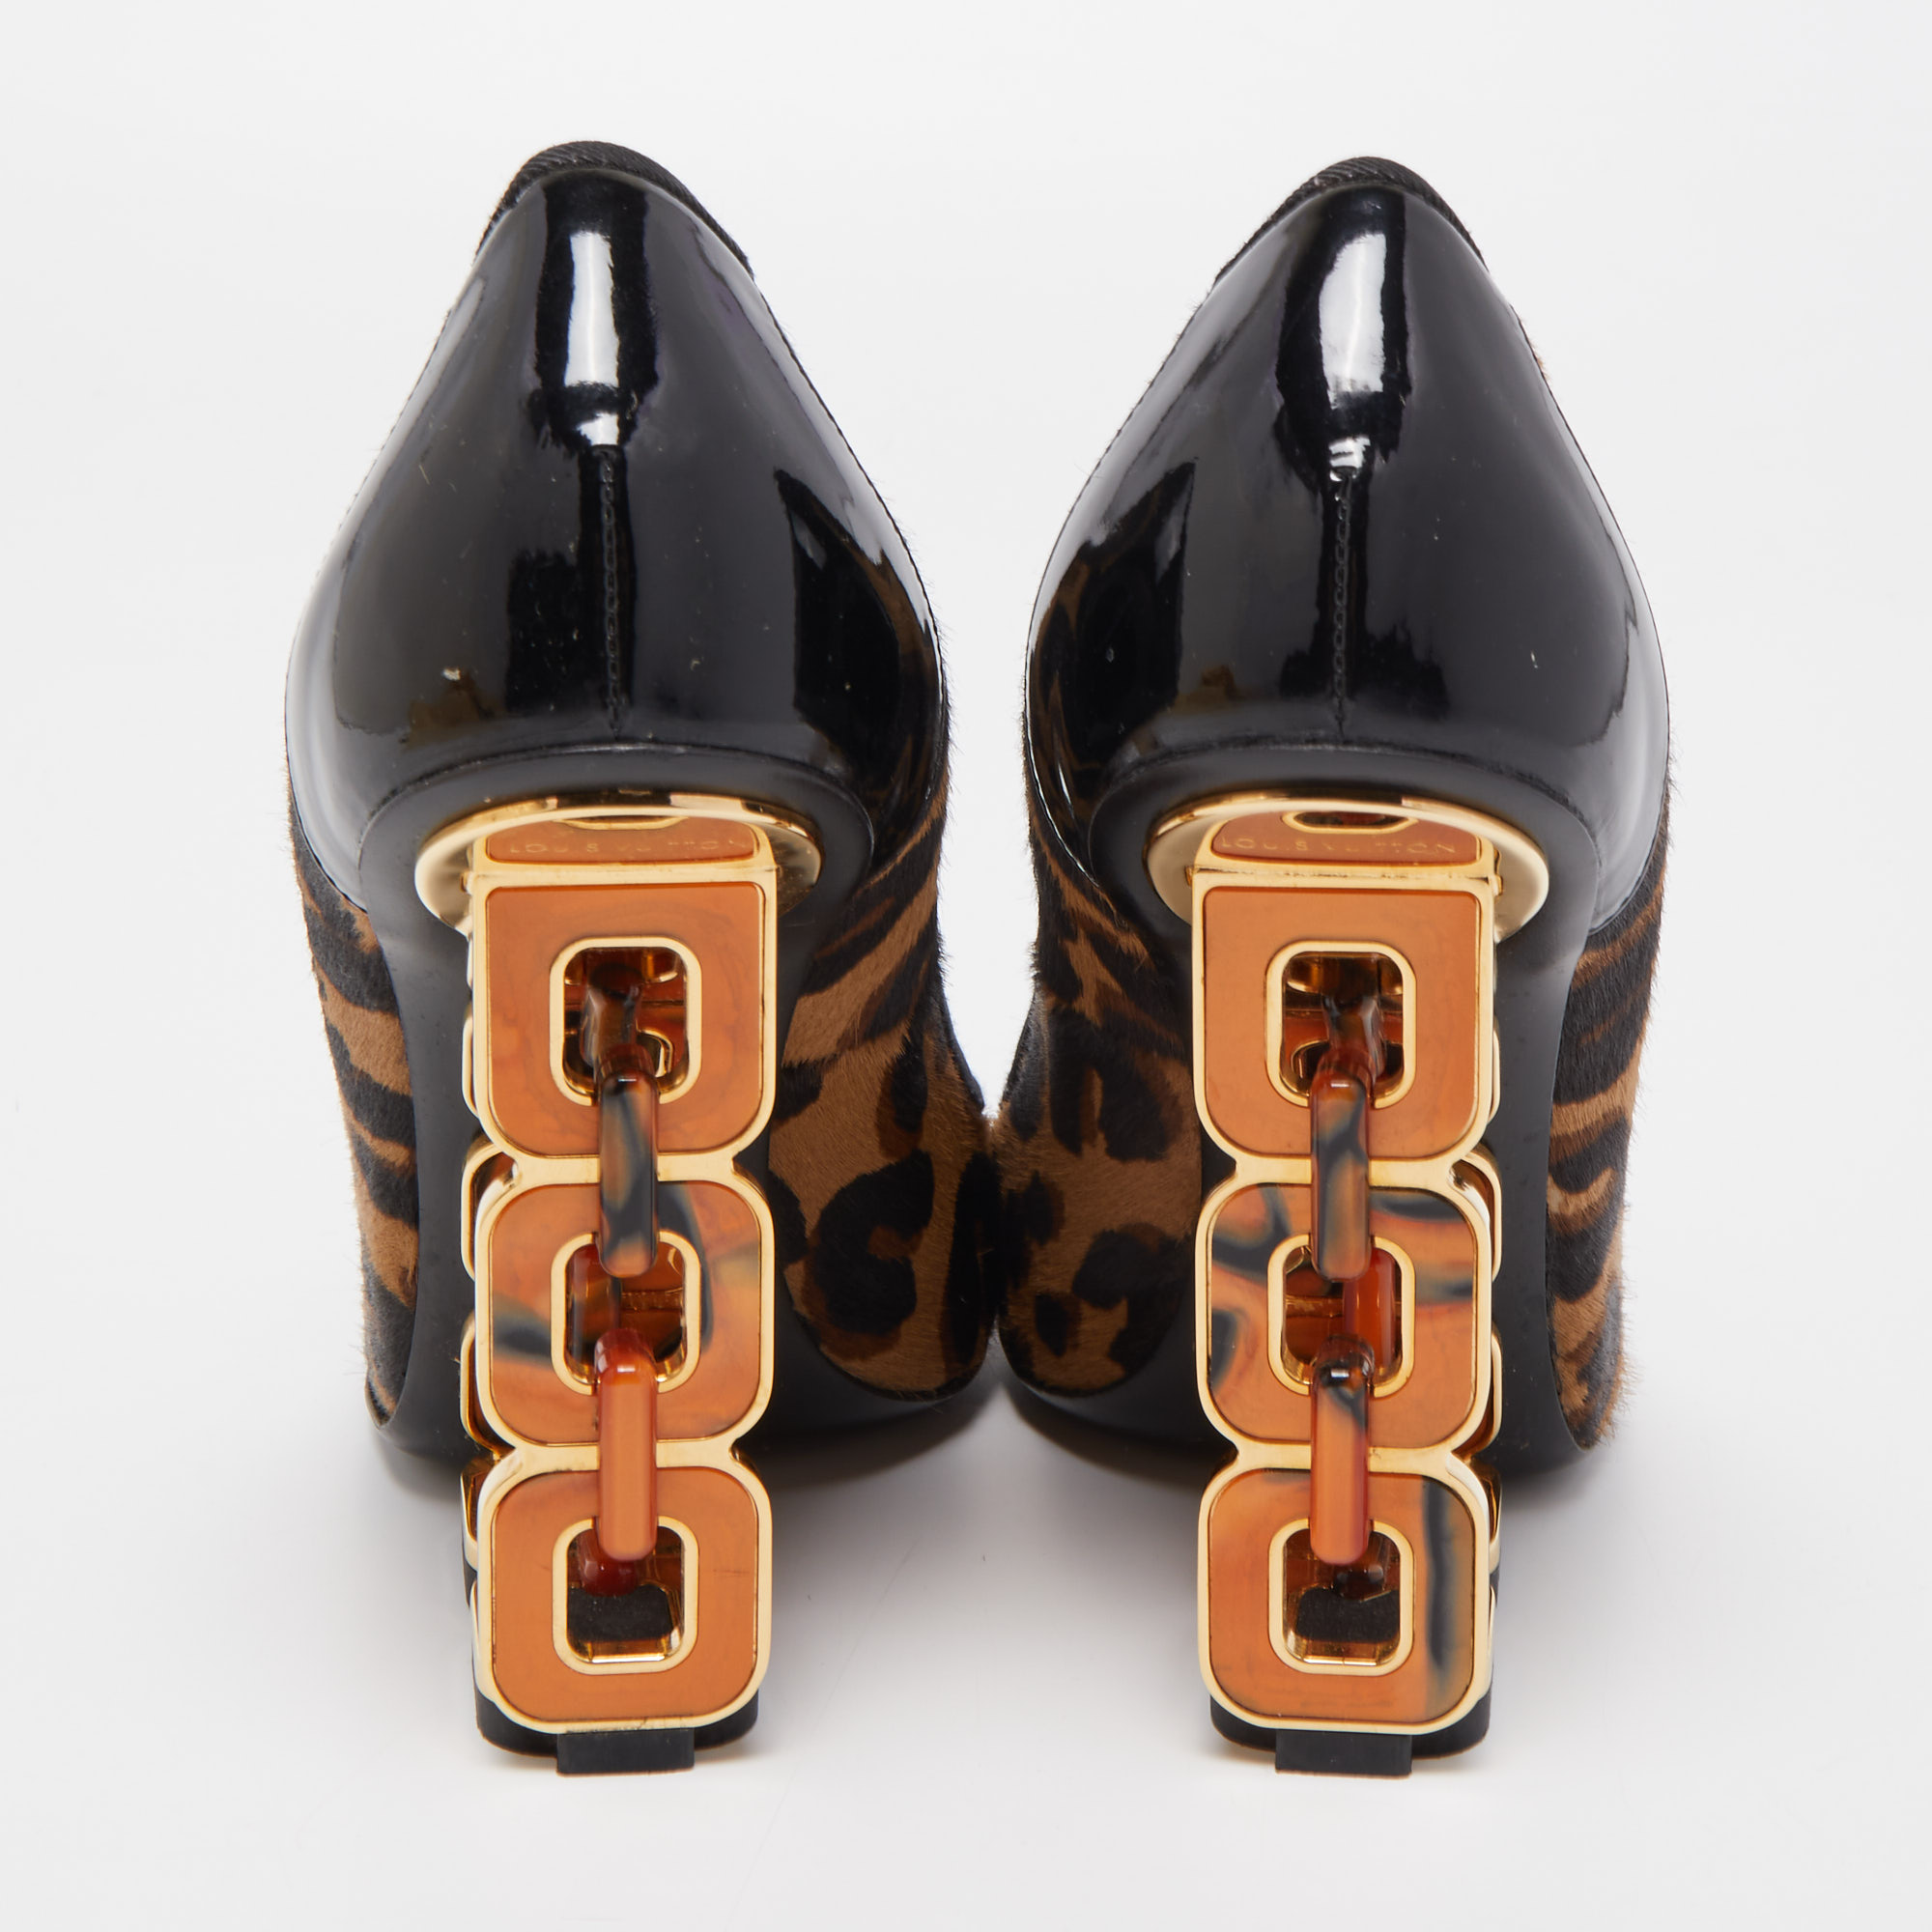 Louis Vuitton Tricolor Leopard Print Calf Hair And Patent Leather Wedge Pumps Size 39